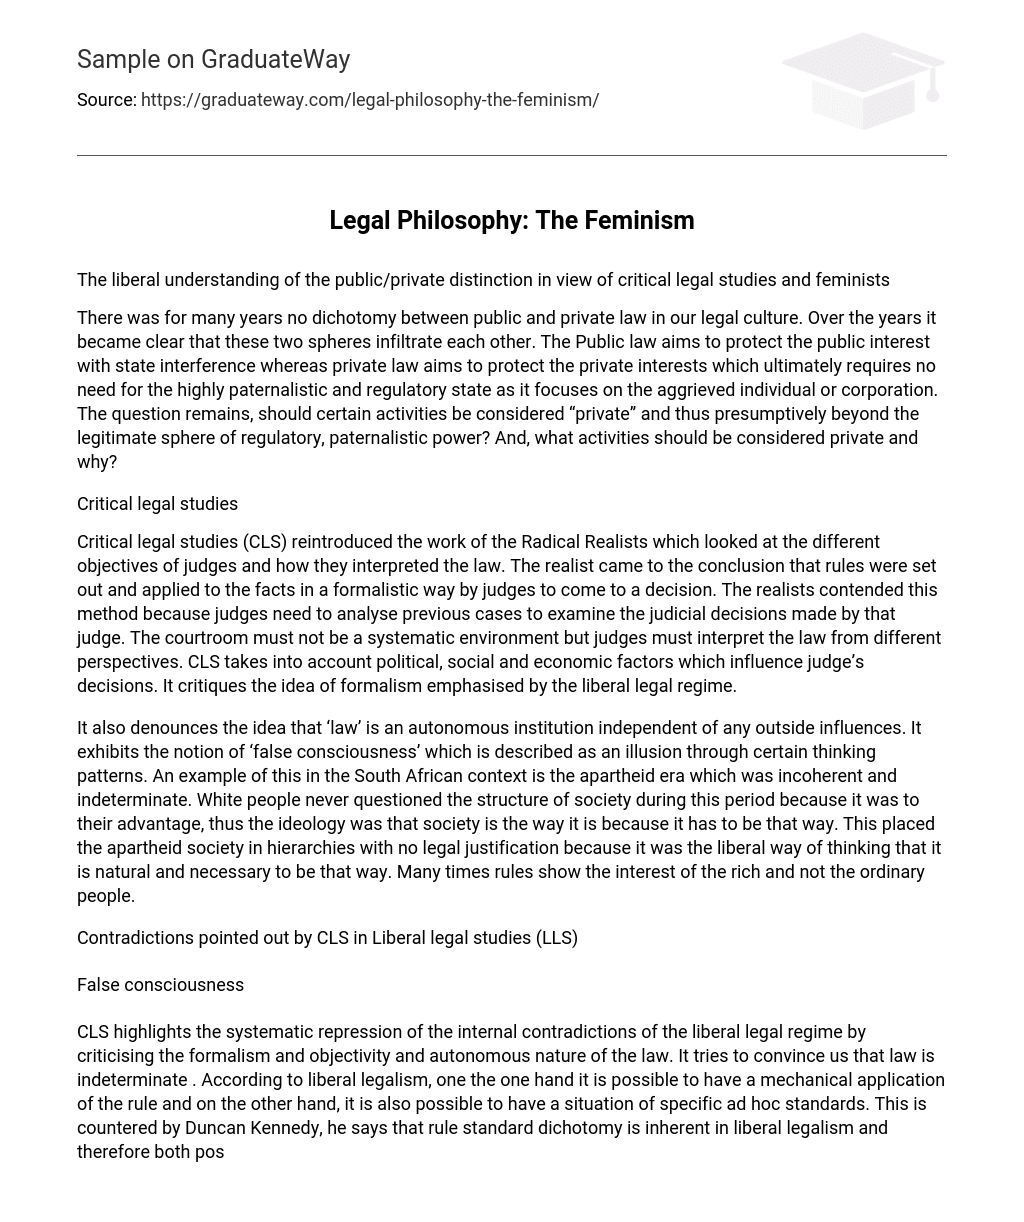 Legal Philosophy: The Feminism